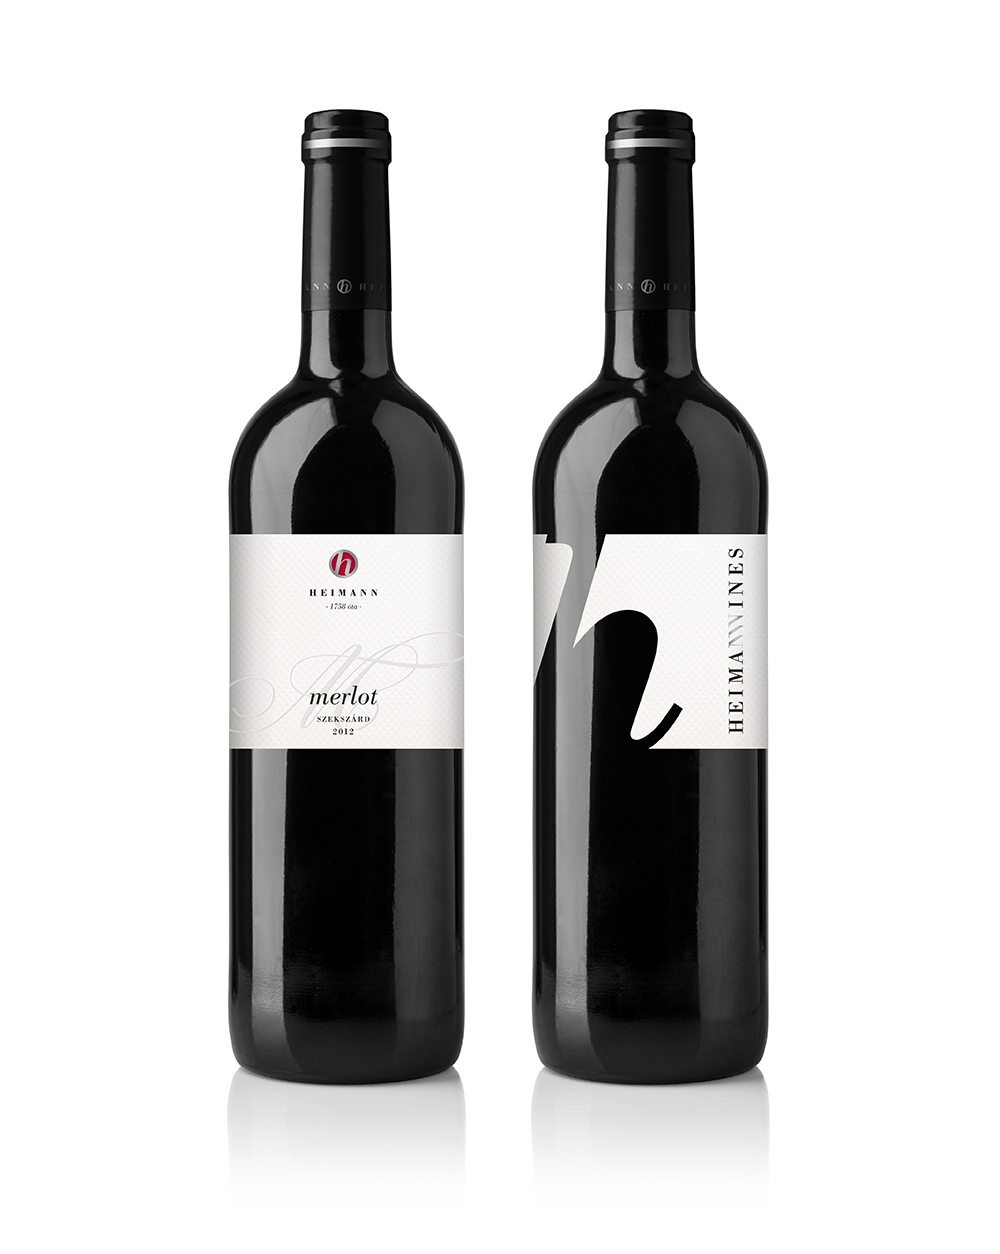 Heimann Heimann Wines szekszárd hungary bottle design wine winery label design basic wines selected wines Simon Says José Simon Merlot syrah Bull’s Blood